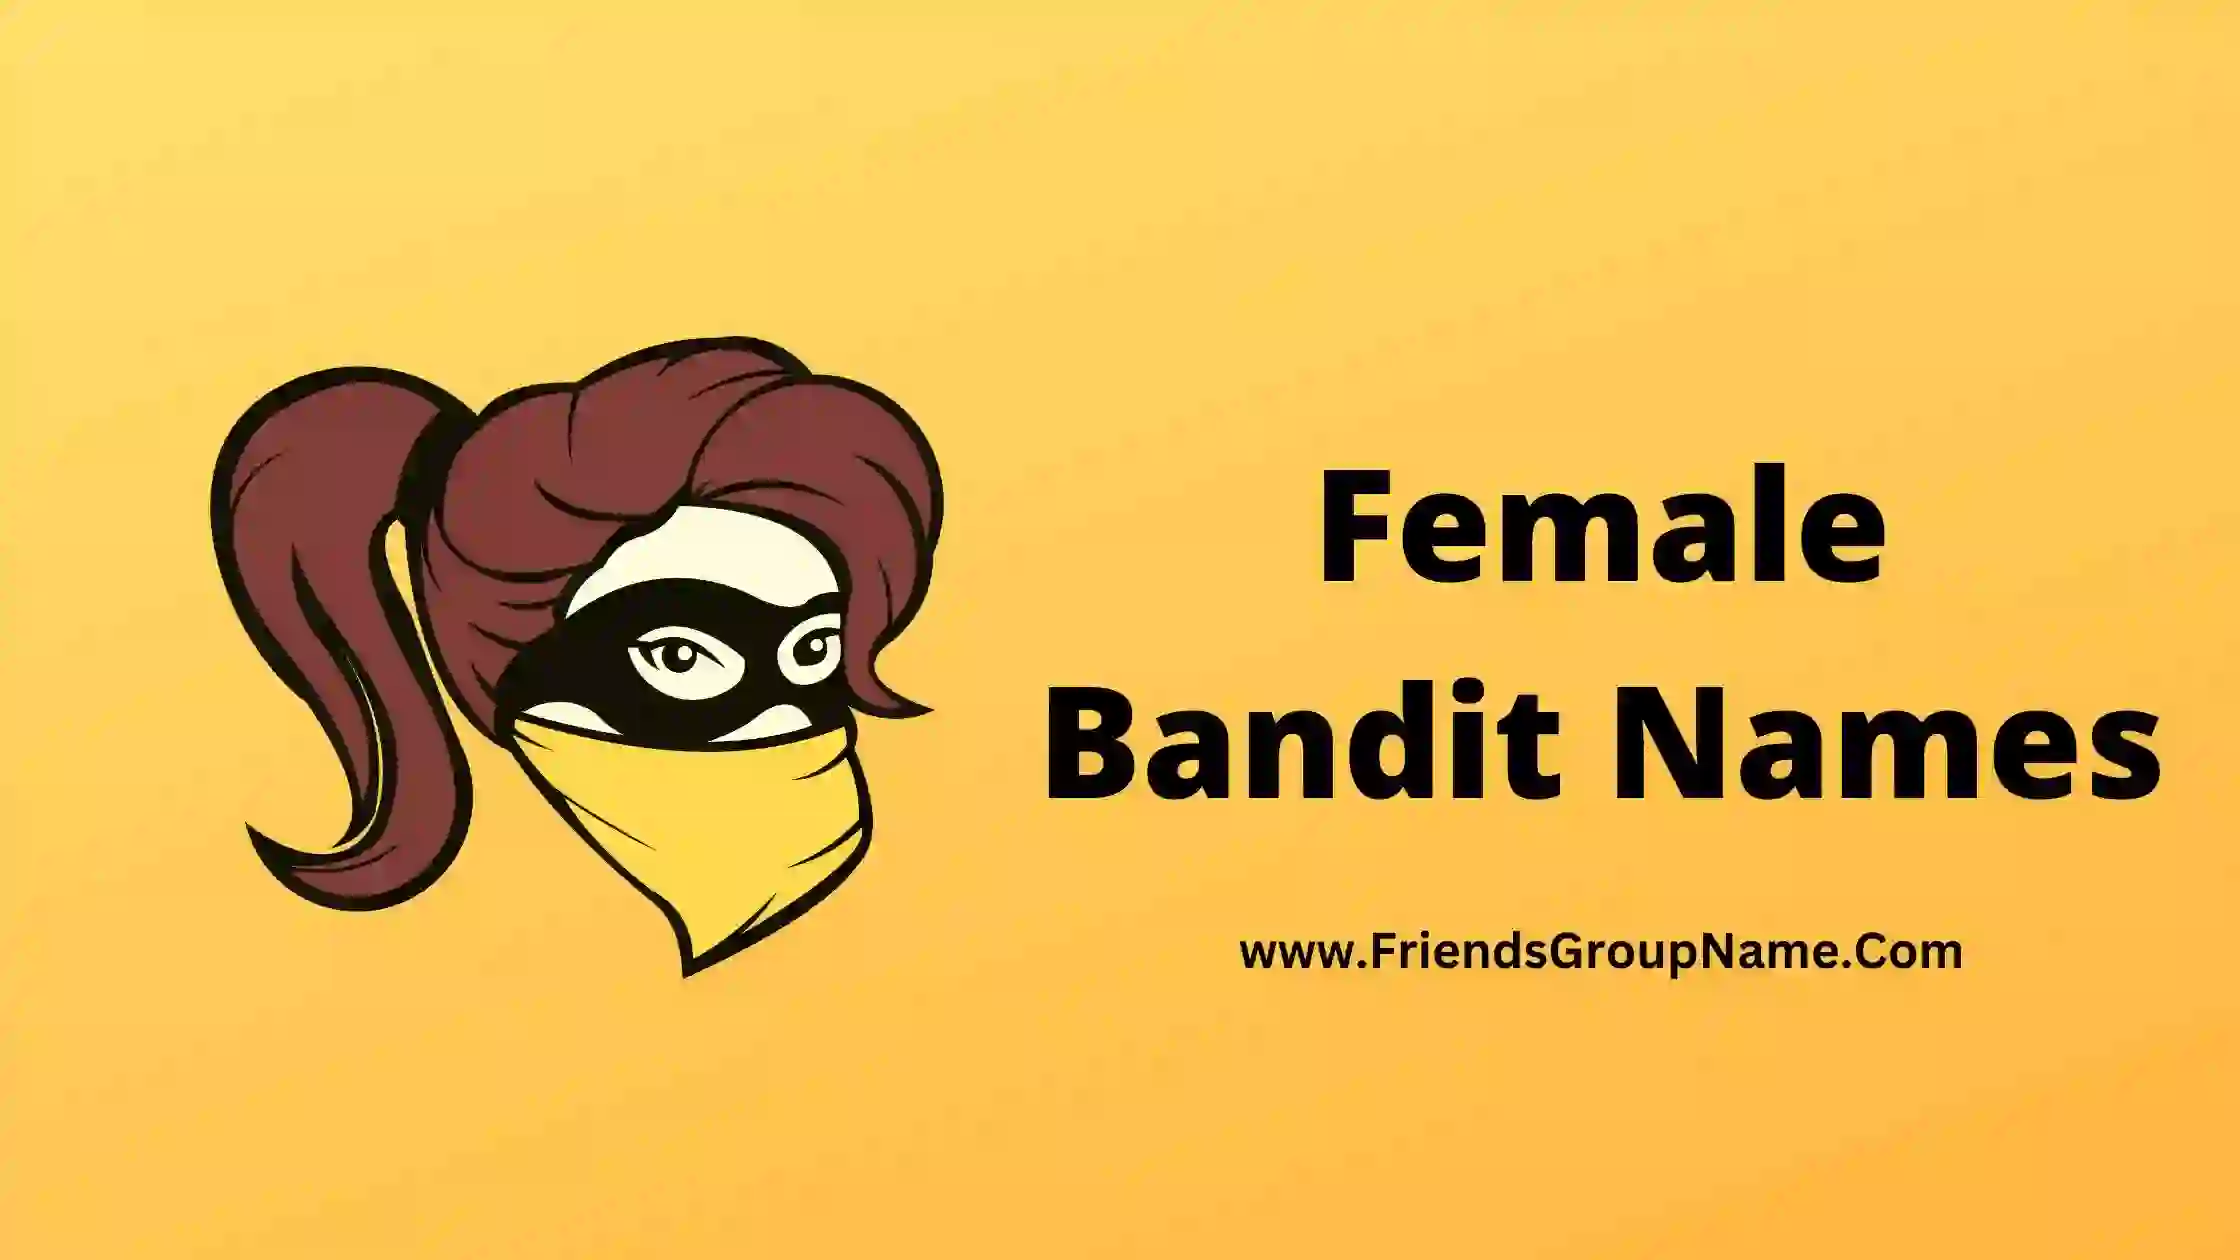 Female Bandit Names